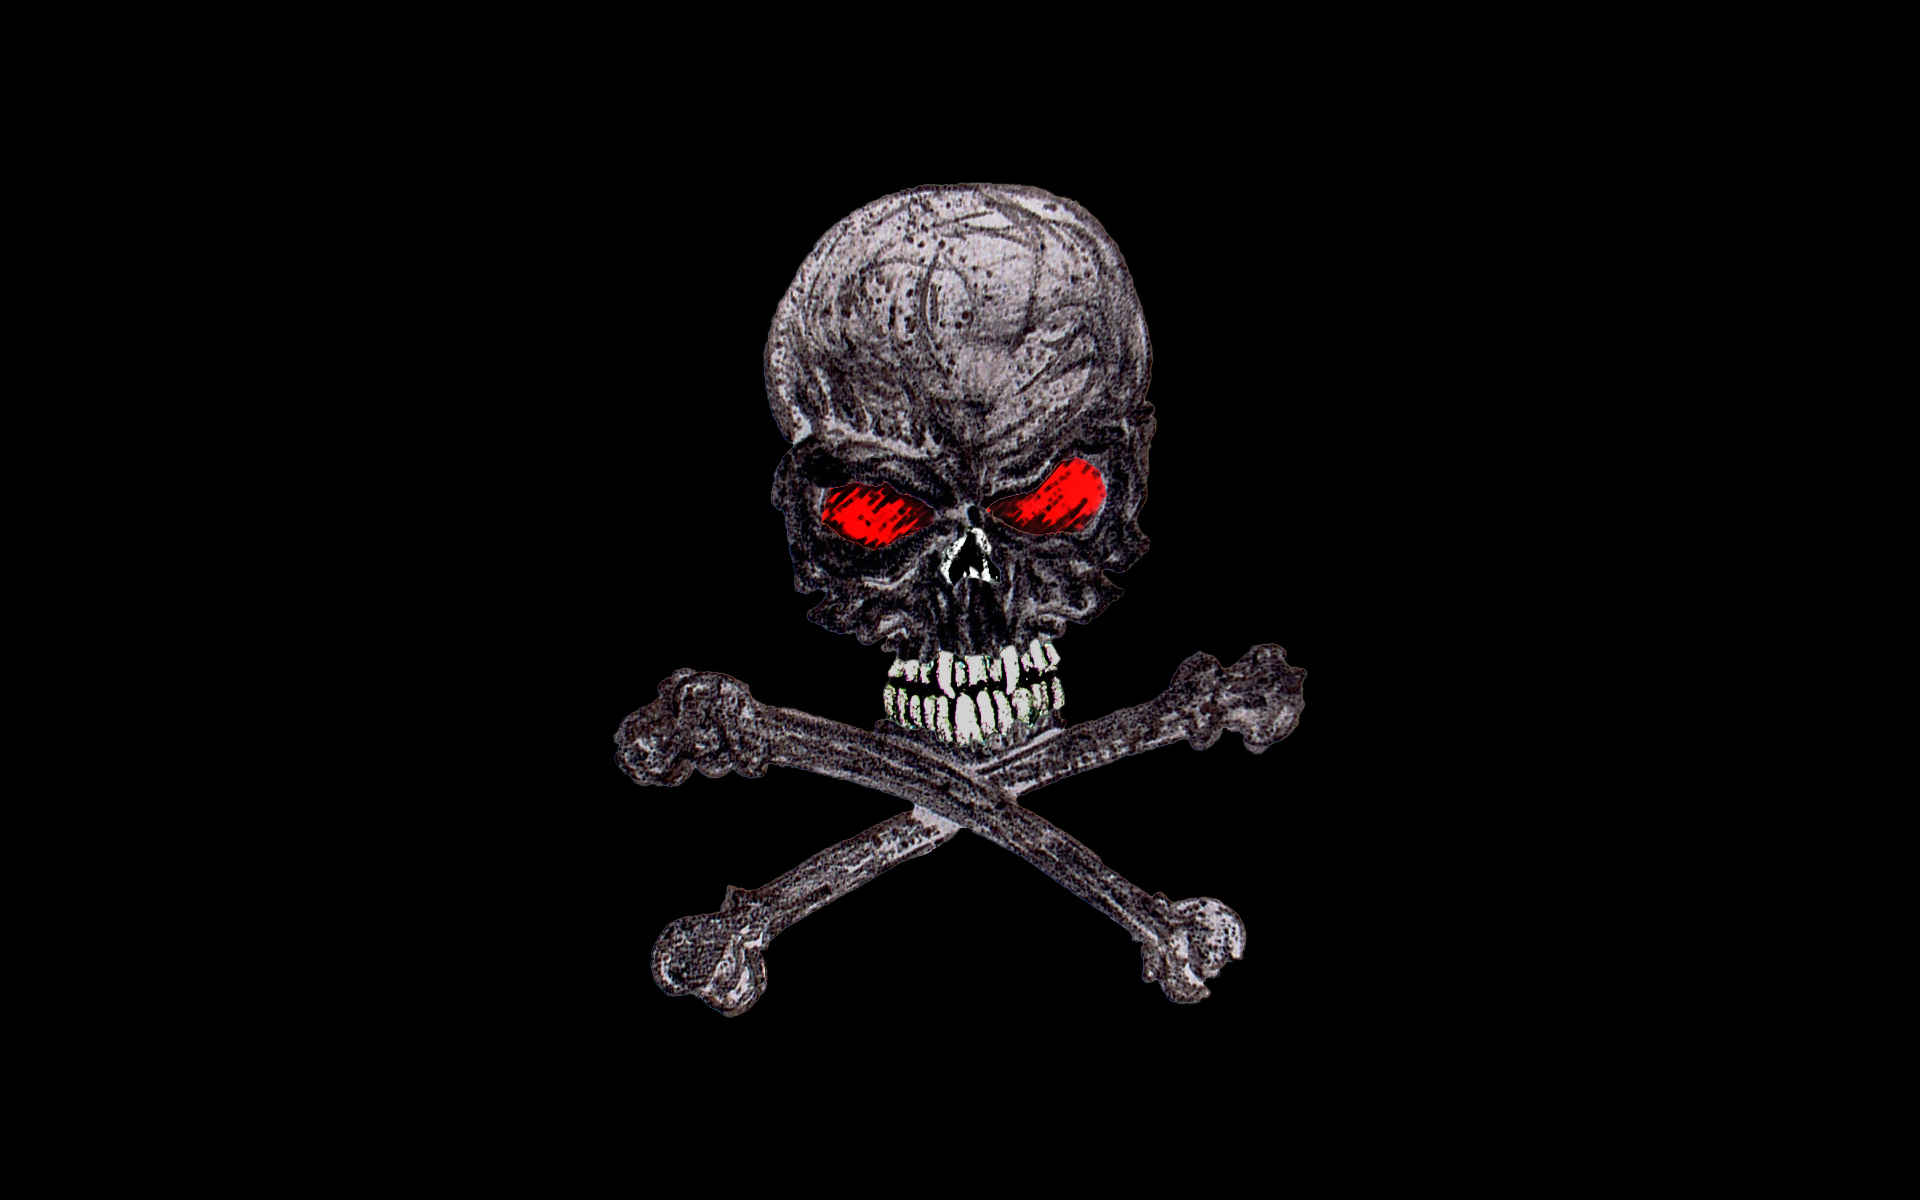 The Sketchy Dark Skull Wallpaper iPhone